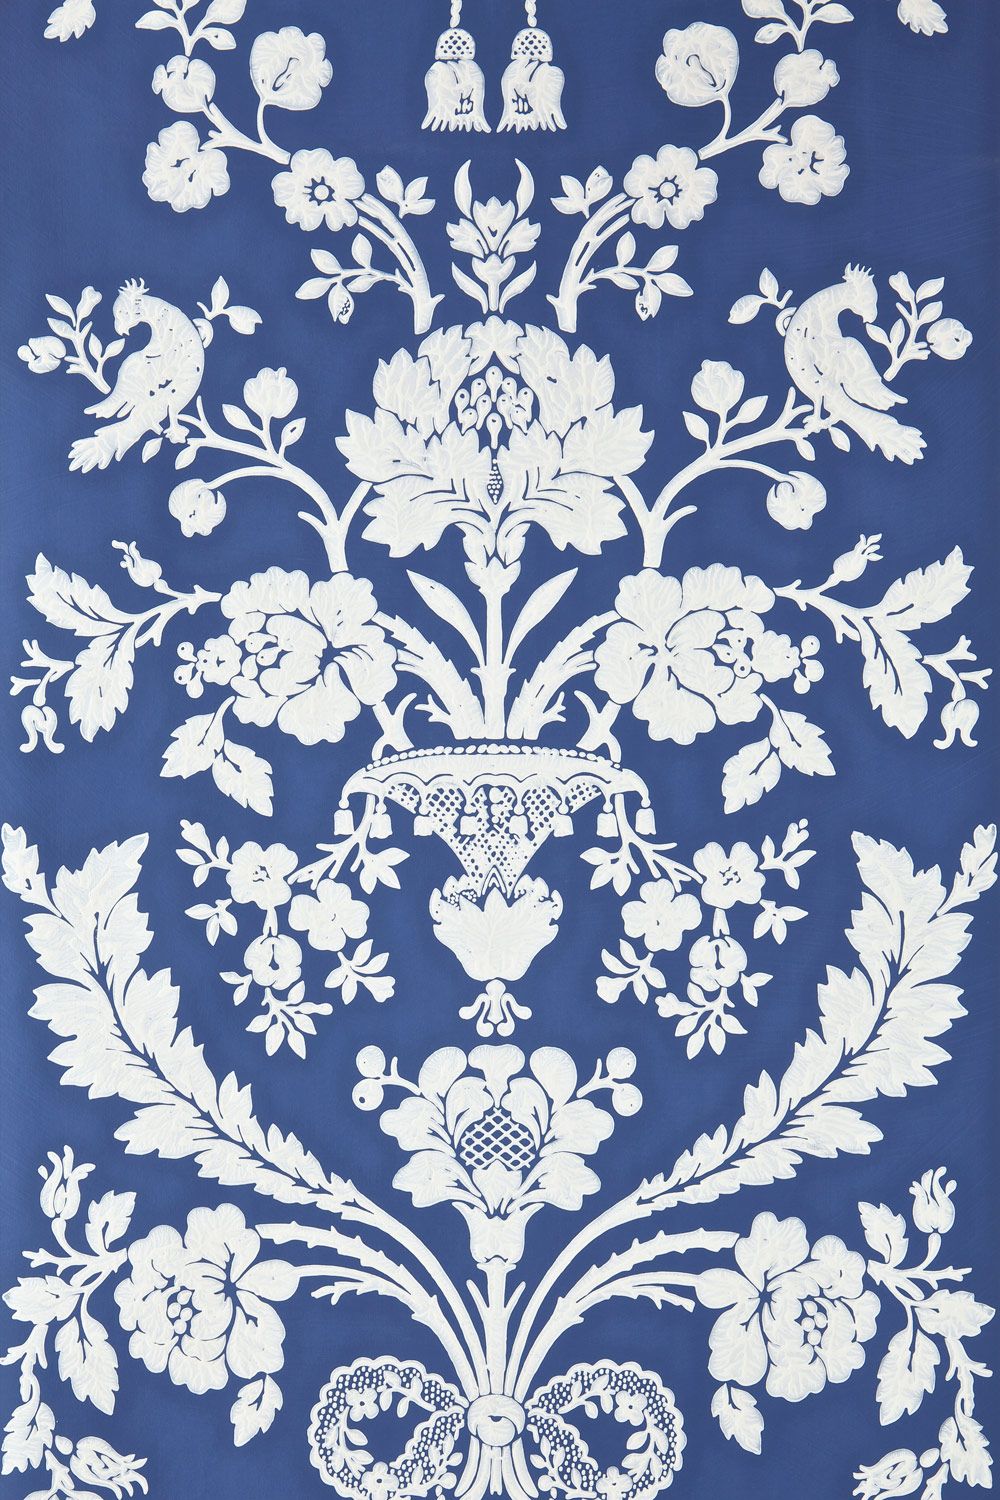 18th century wallpaper,pattern,design,textile,floral design,visual arts